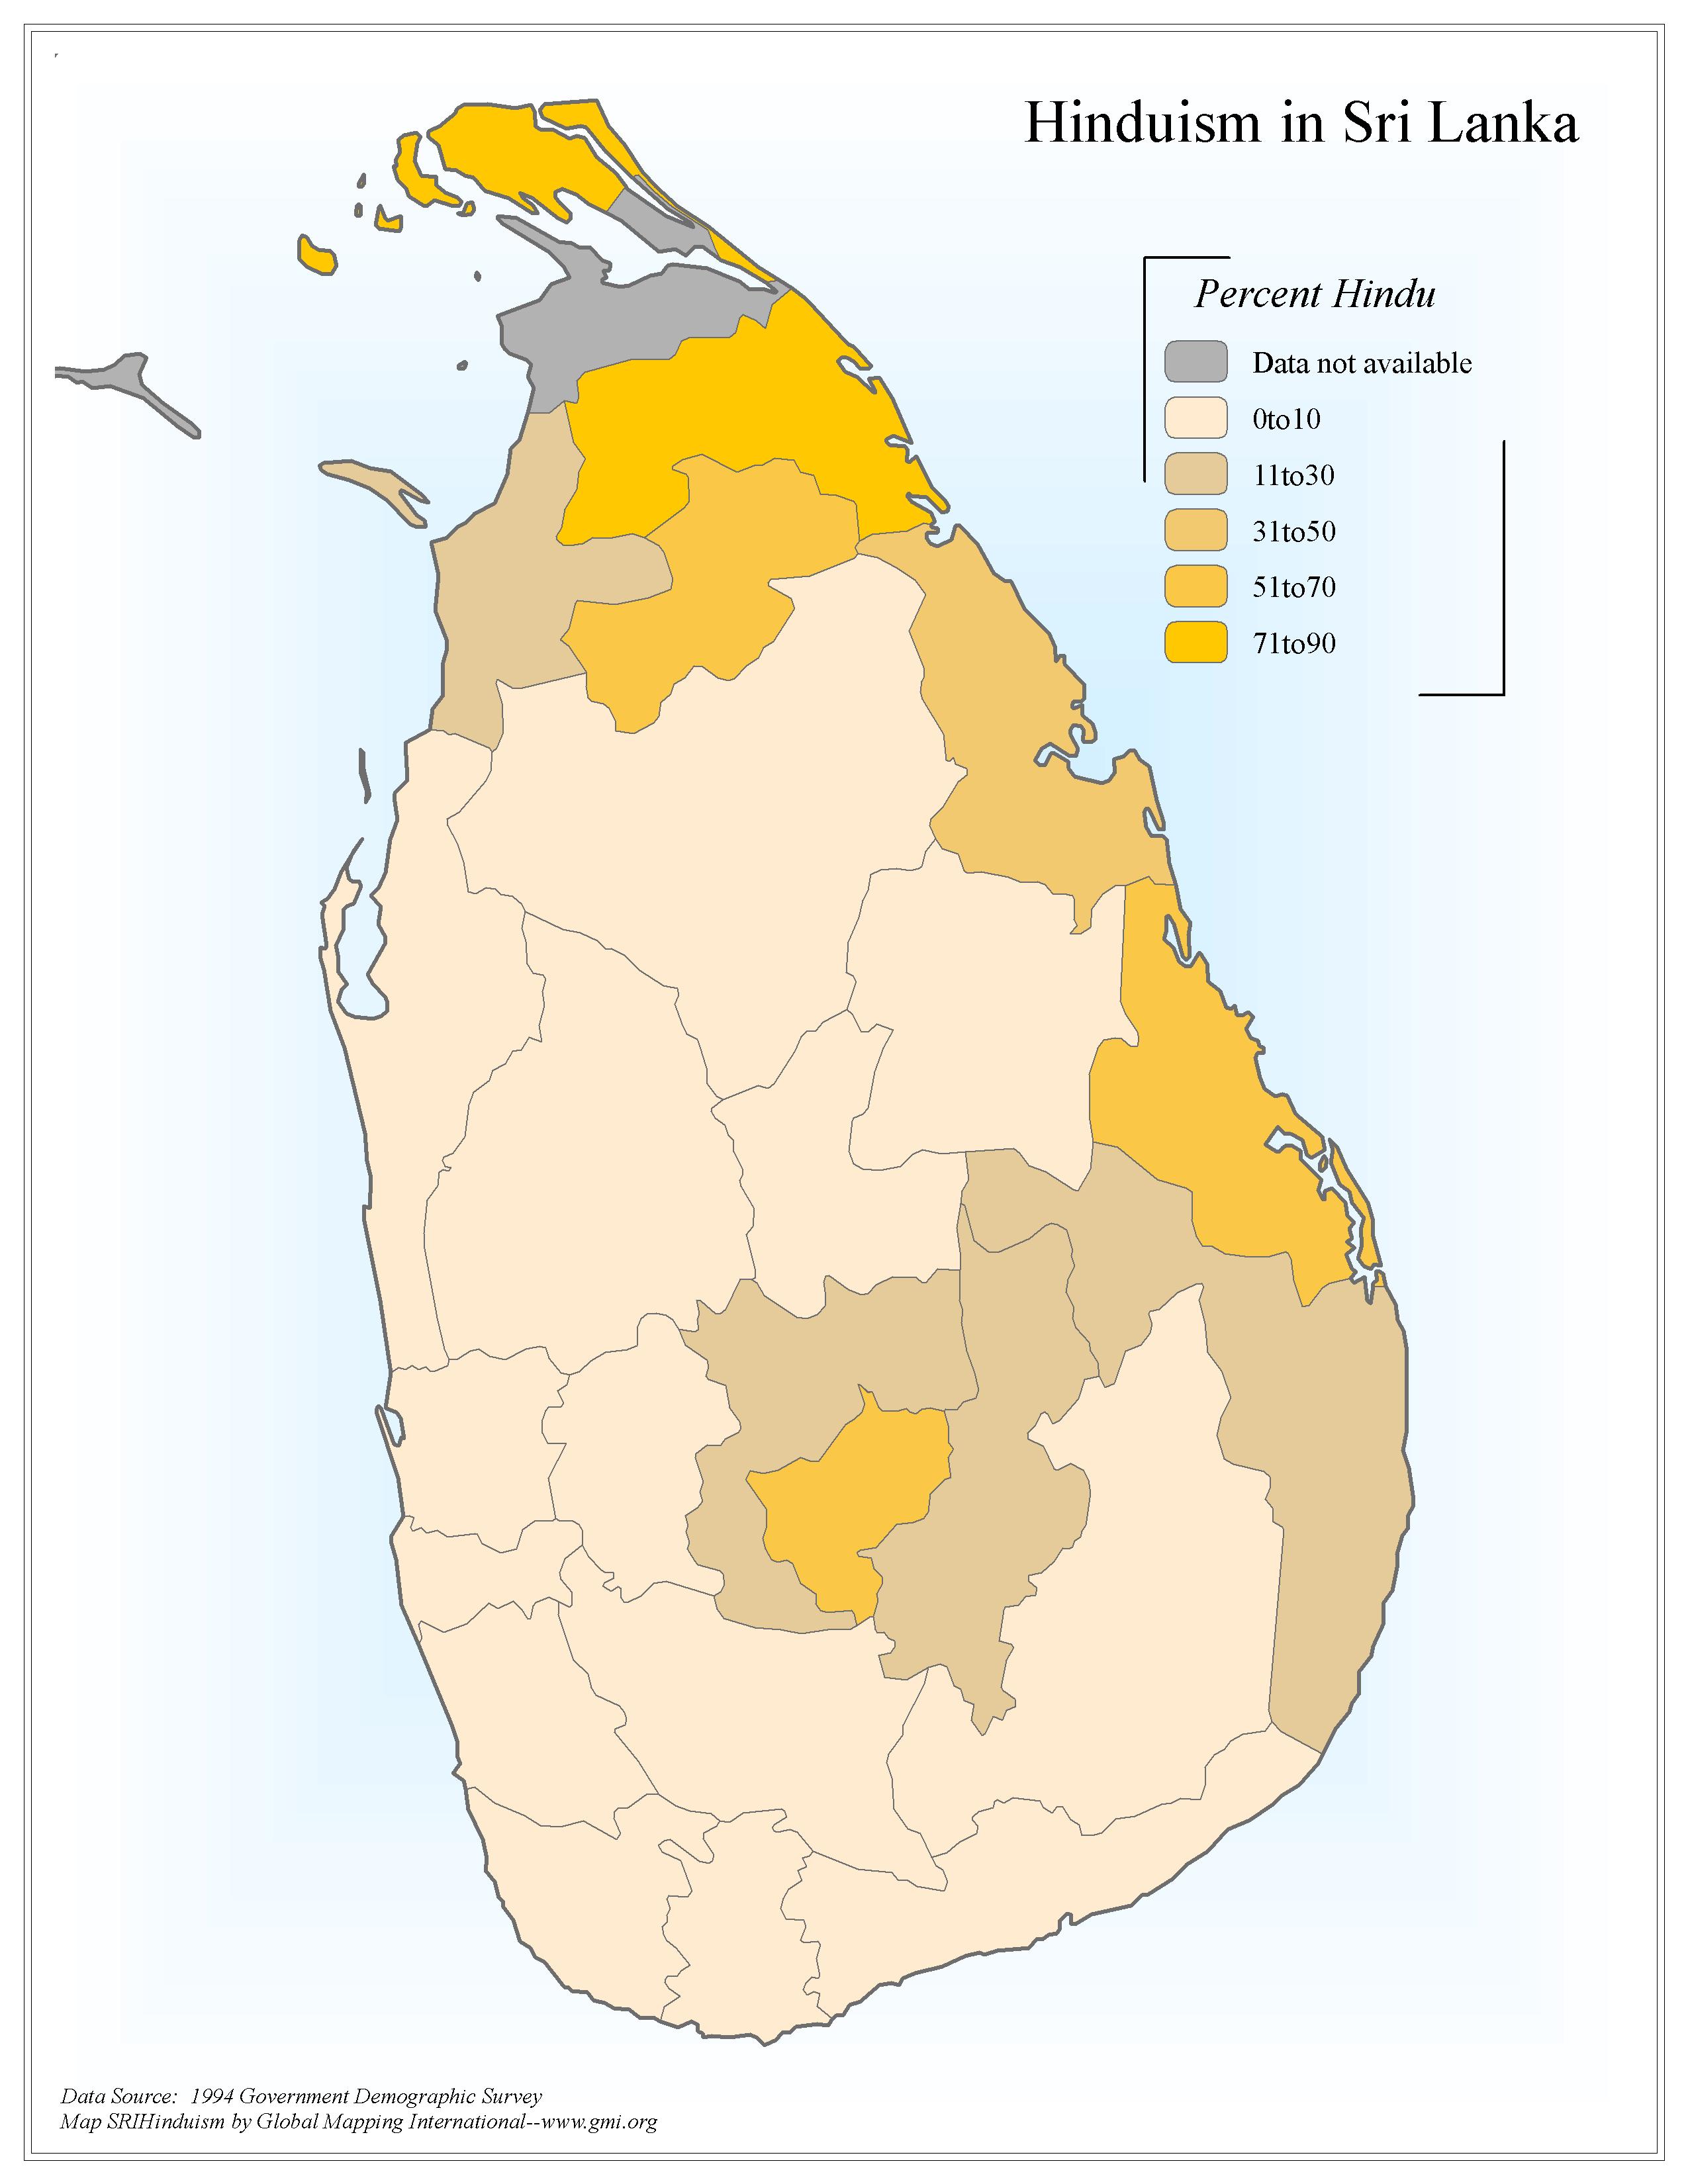 Hinduism in Sri Lanka